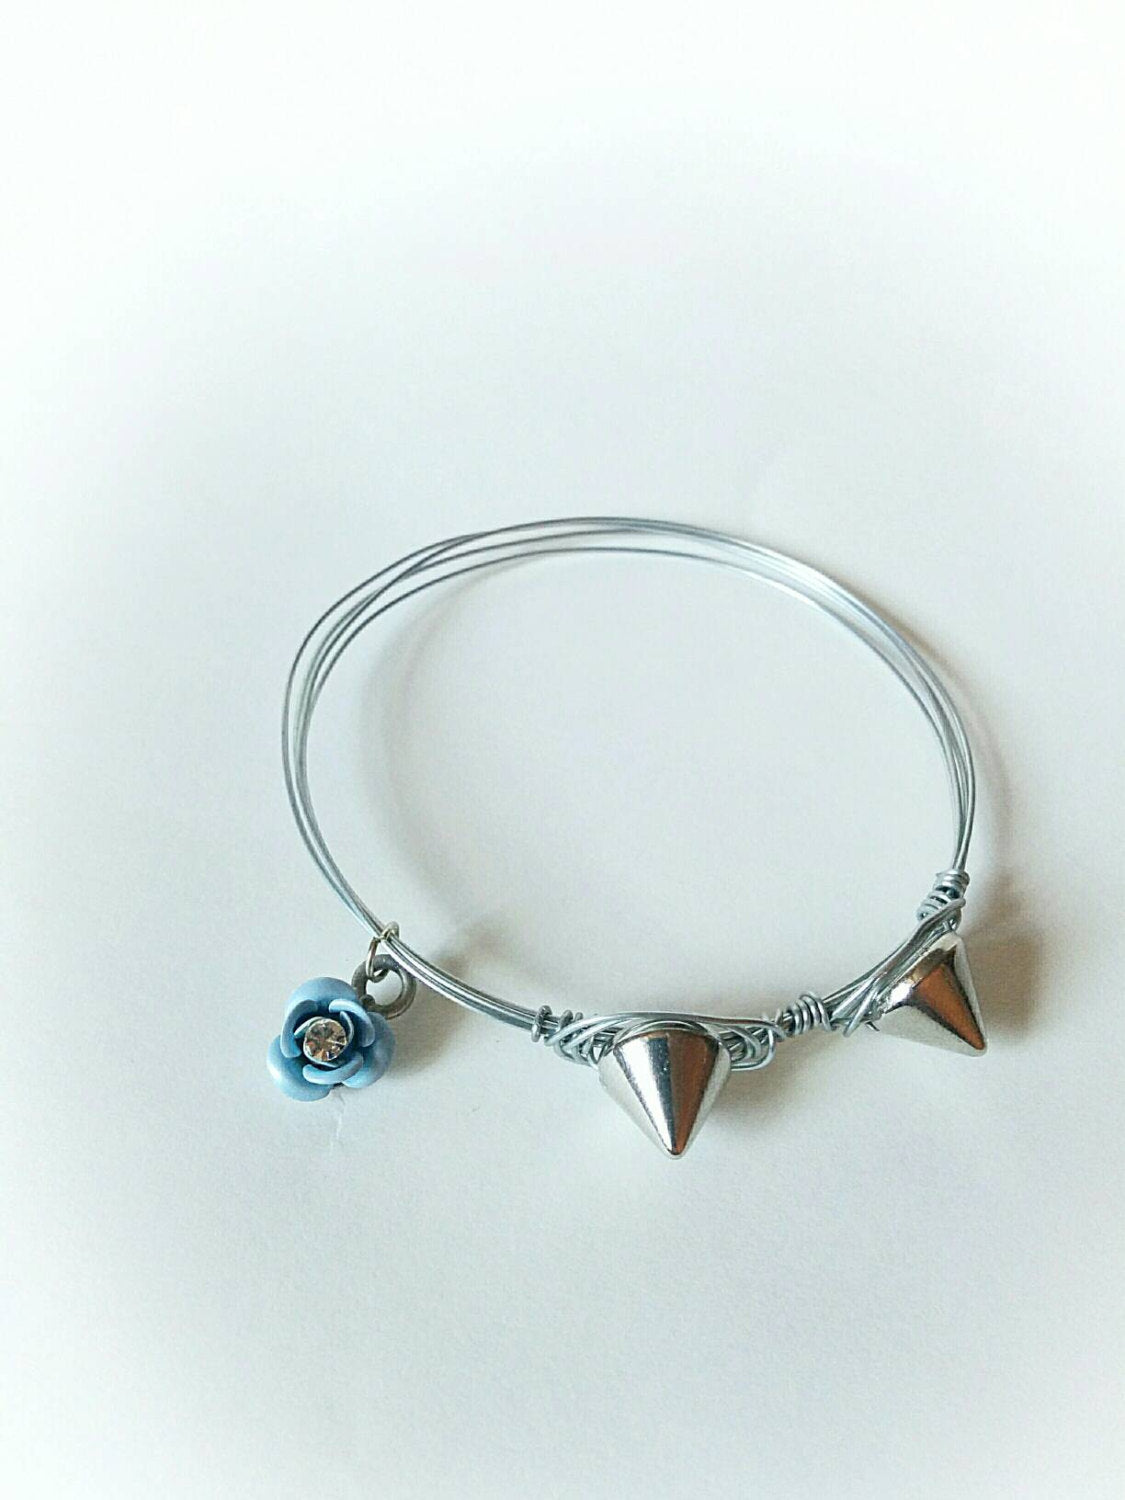 Boho spike bangles with blue rose/ silver spike bangles/wire wrapped bangles/hippie cat ear bangle/boho gift for her/bohemian gift bracelet